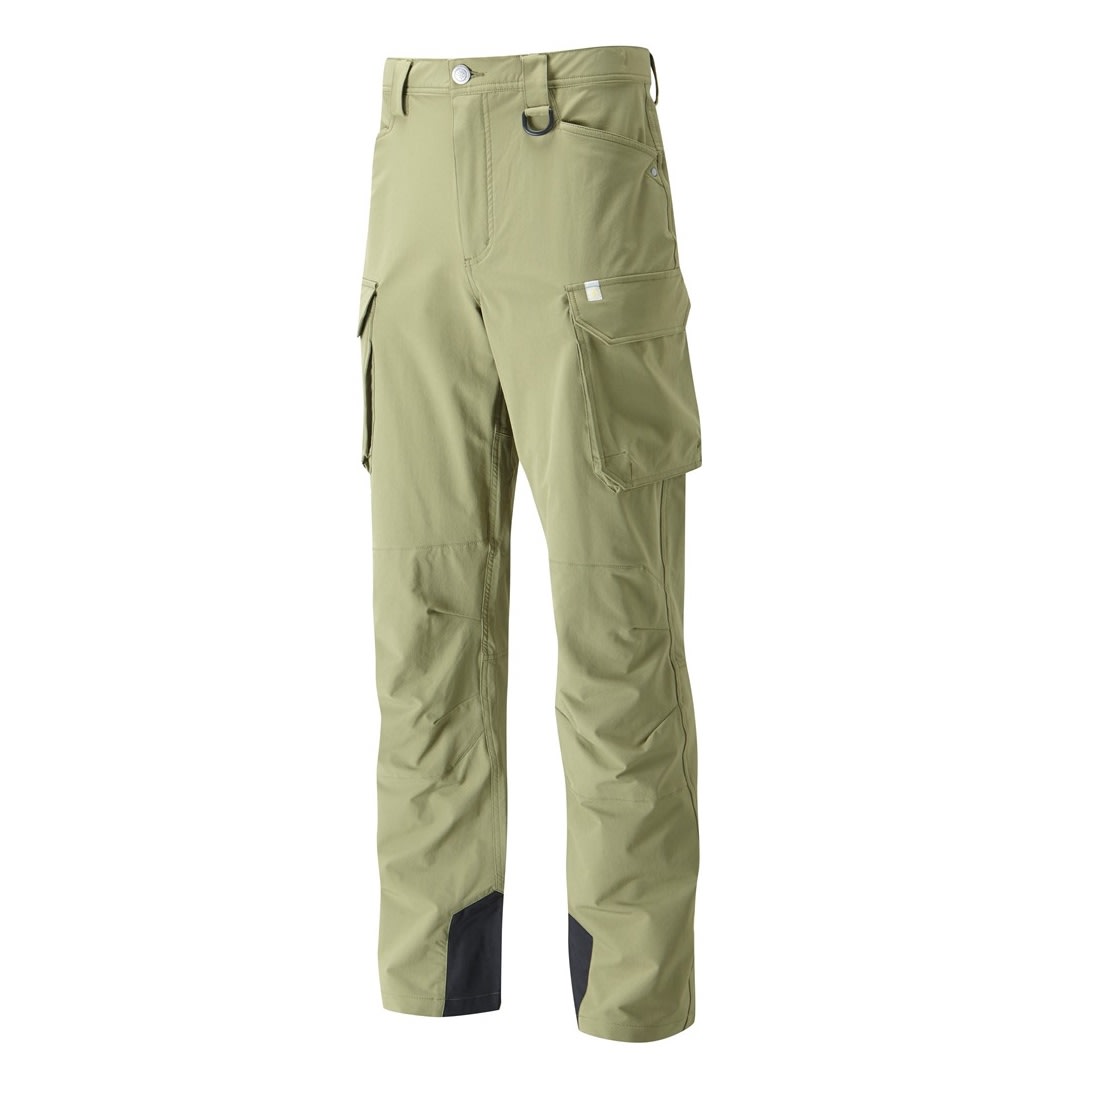 Wychwood kalhoty Cargo Pant zelené, vel.M